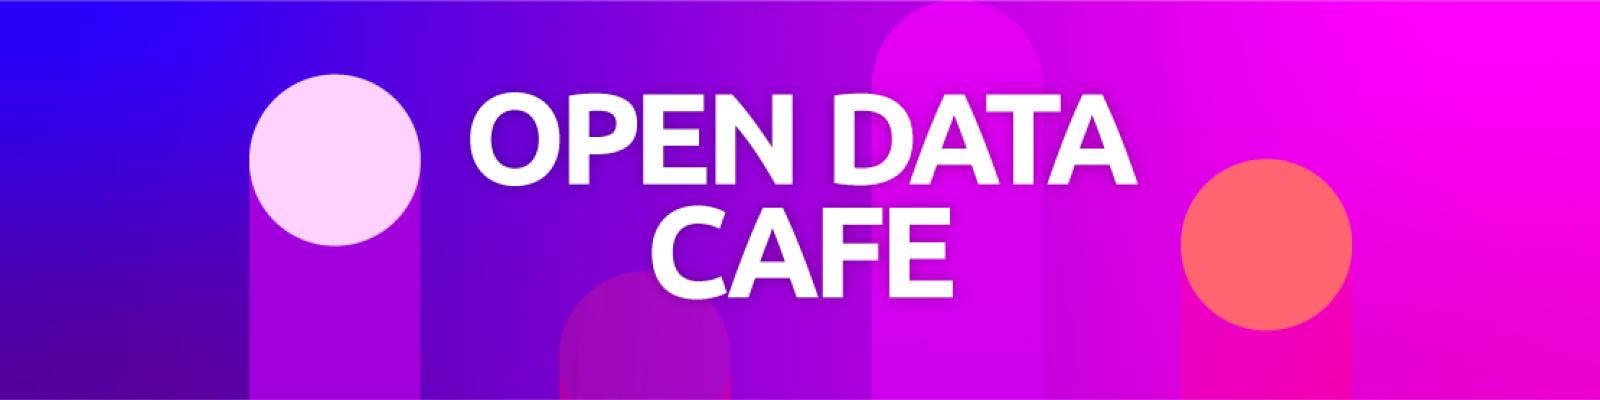 Open Data Cafe